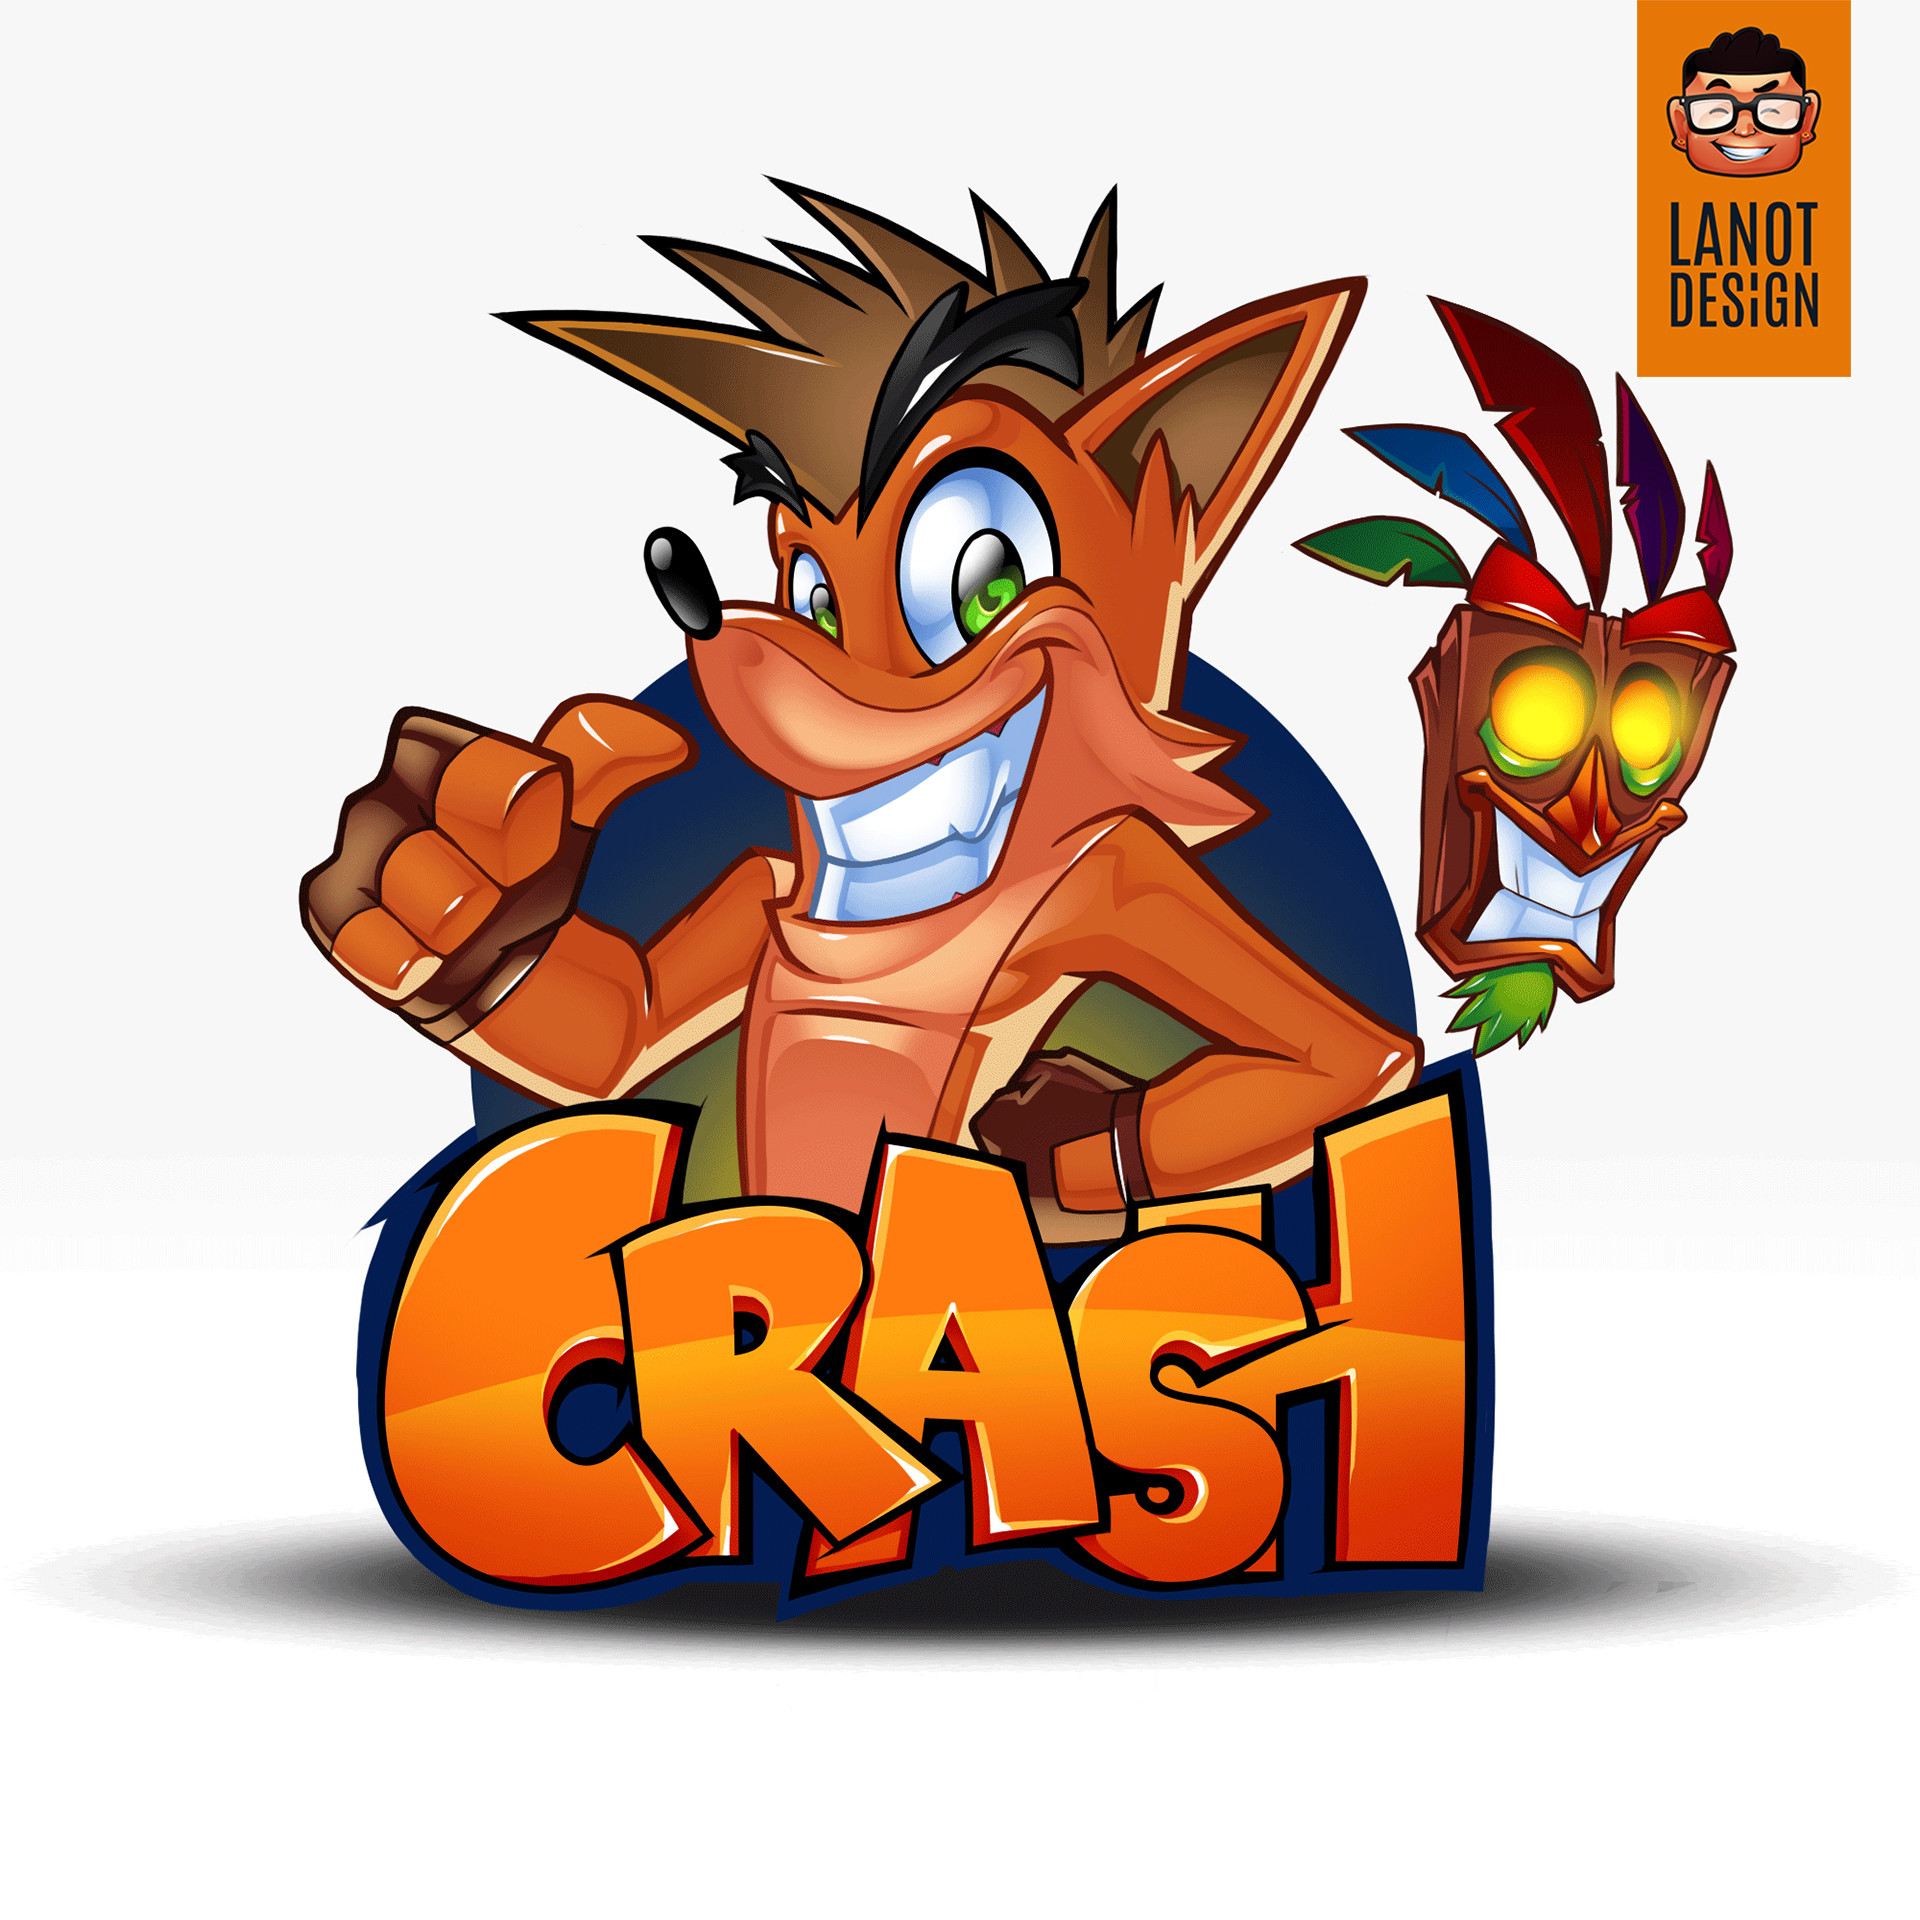 Crash Bandicoot Fan Art Character Design , Harvey Lanot.